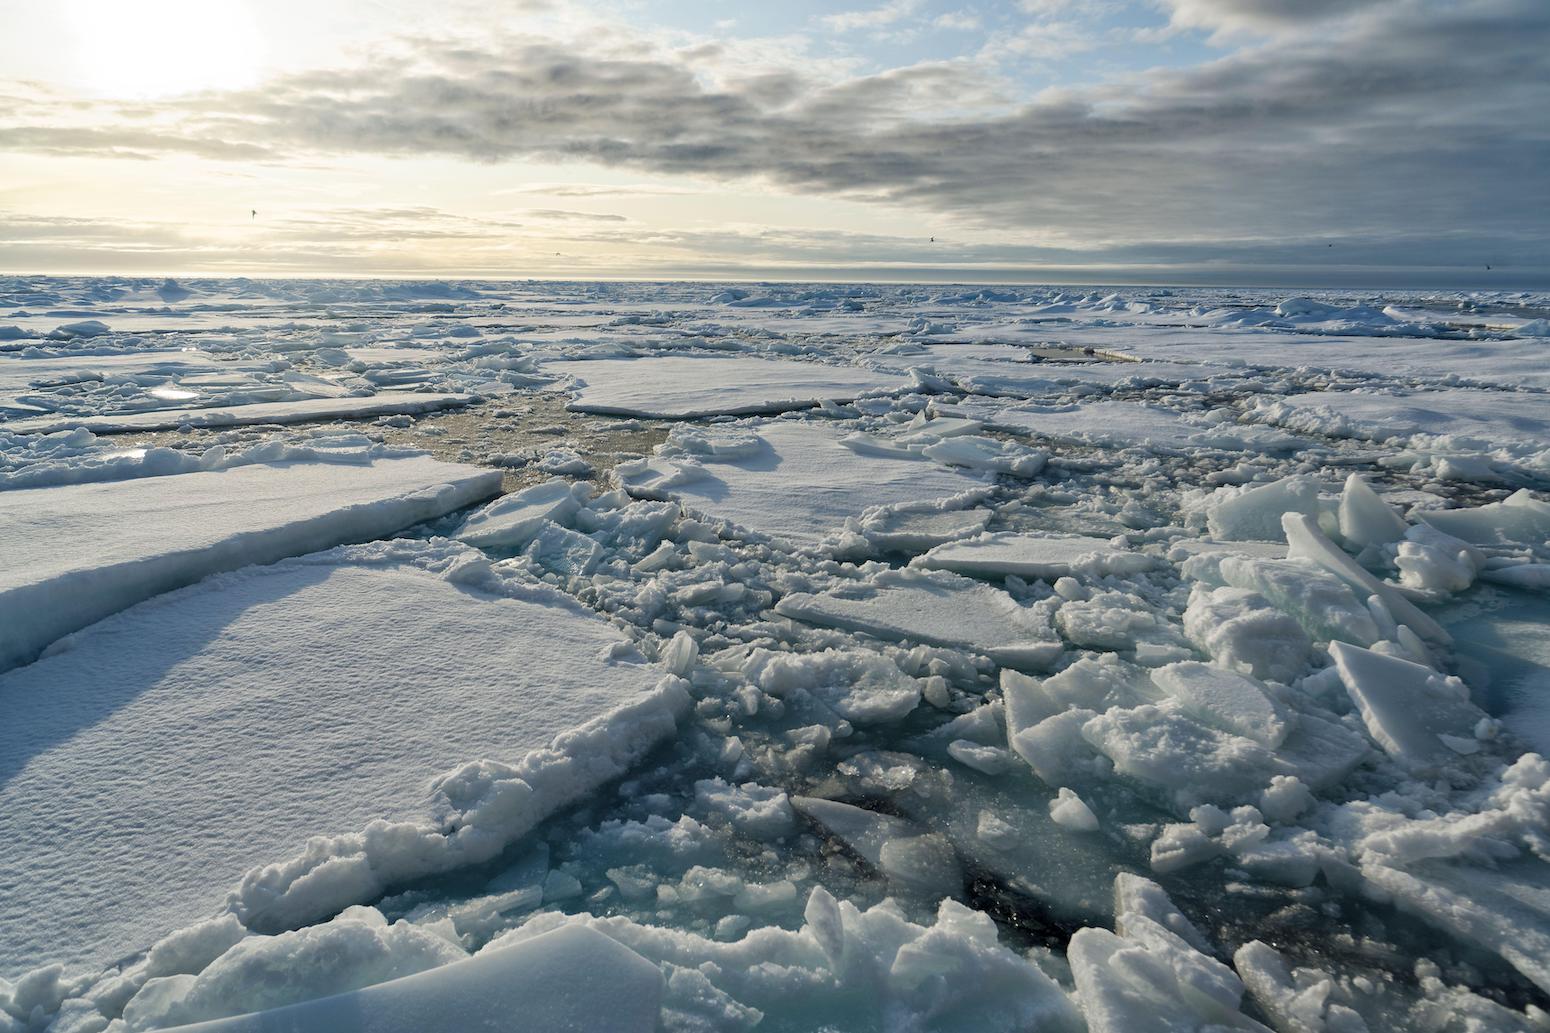 Antarctic sea ice ‘behaving strangely’ as Arctic reaches ‘below-average’ winter peak - Carbon Brief